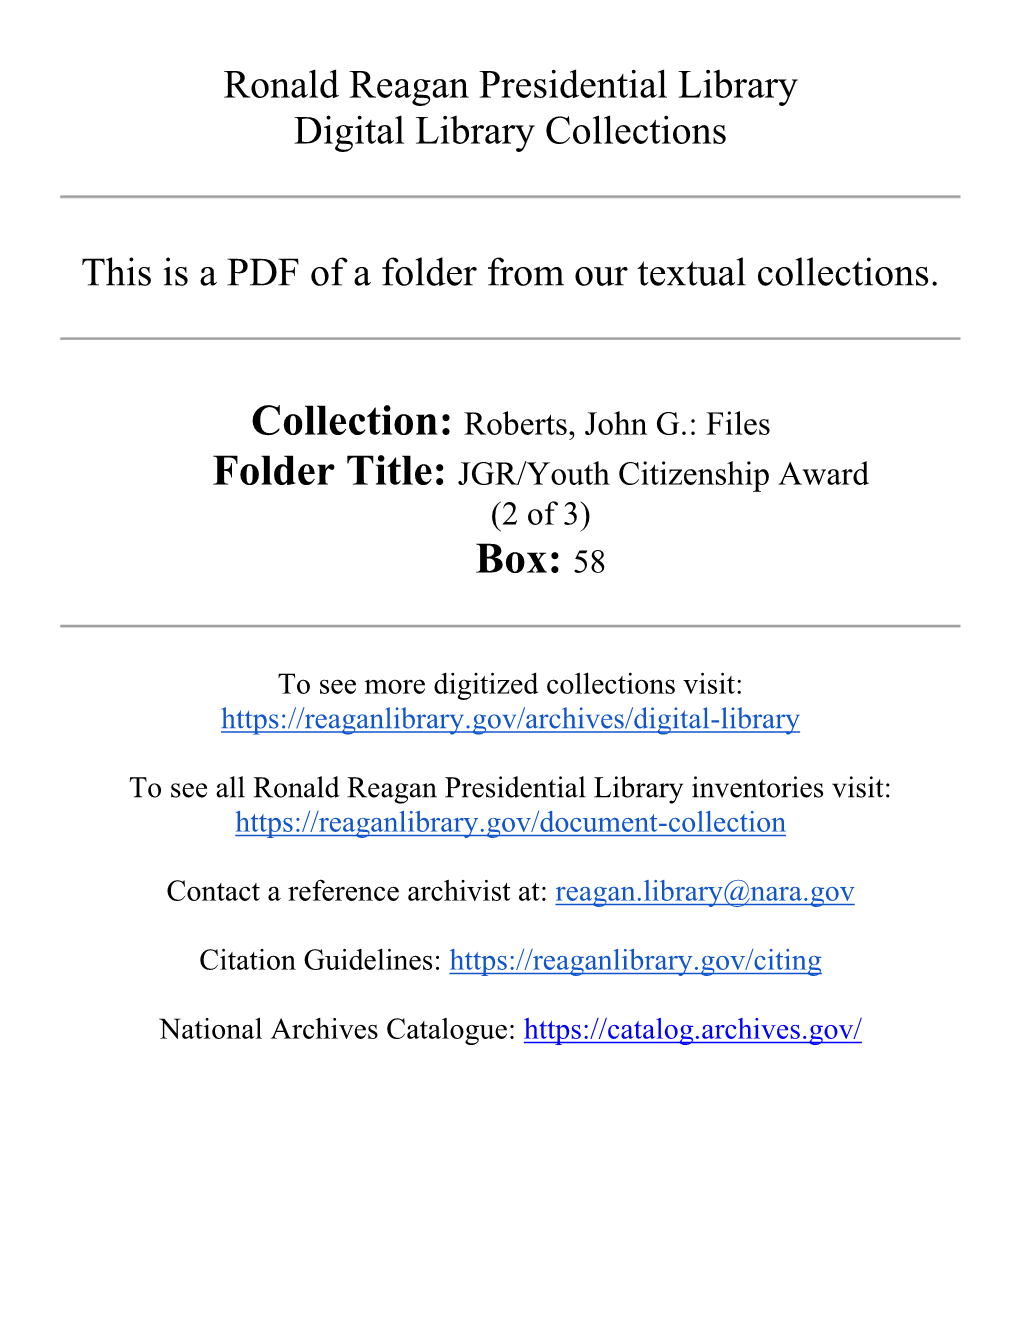 Roberts, John G.: Files Folder Title: JGR/Youth Citizenship Award (2 of 3) Box: 58